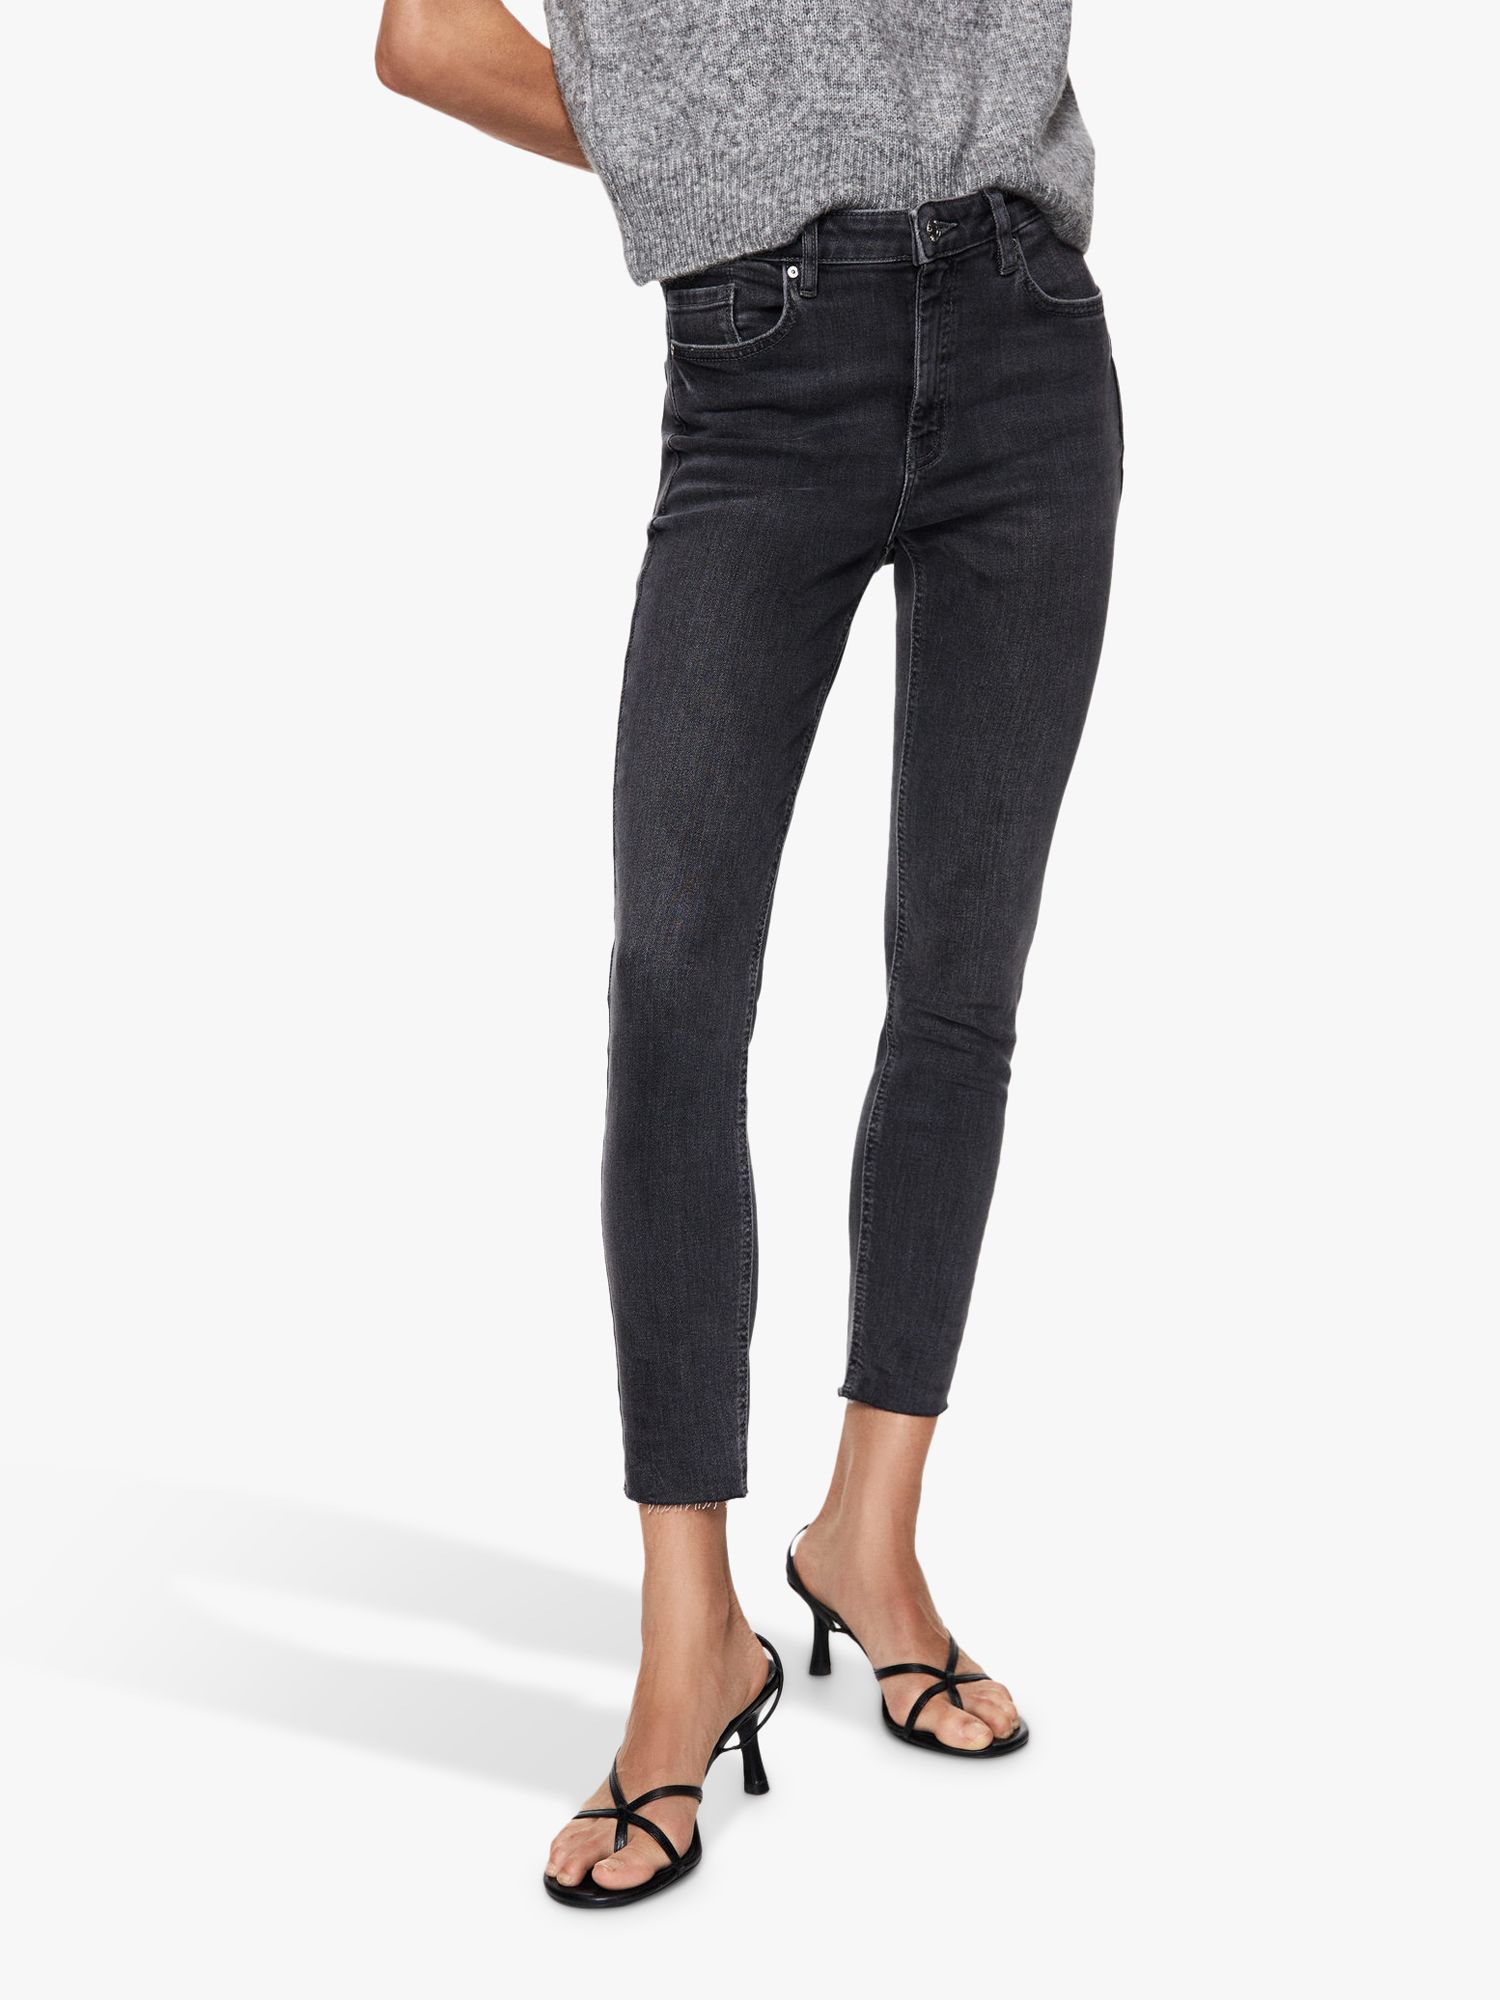 Mango Skinny Cropped Jeans, Grey at John Lewis & Partners